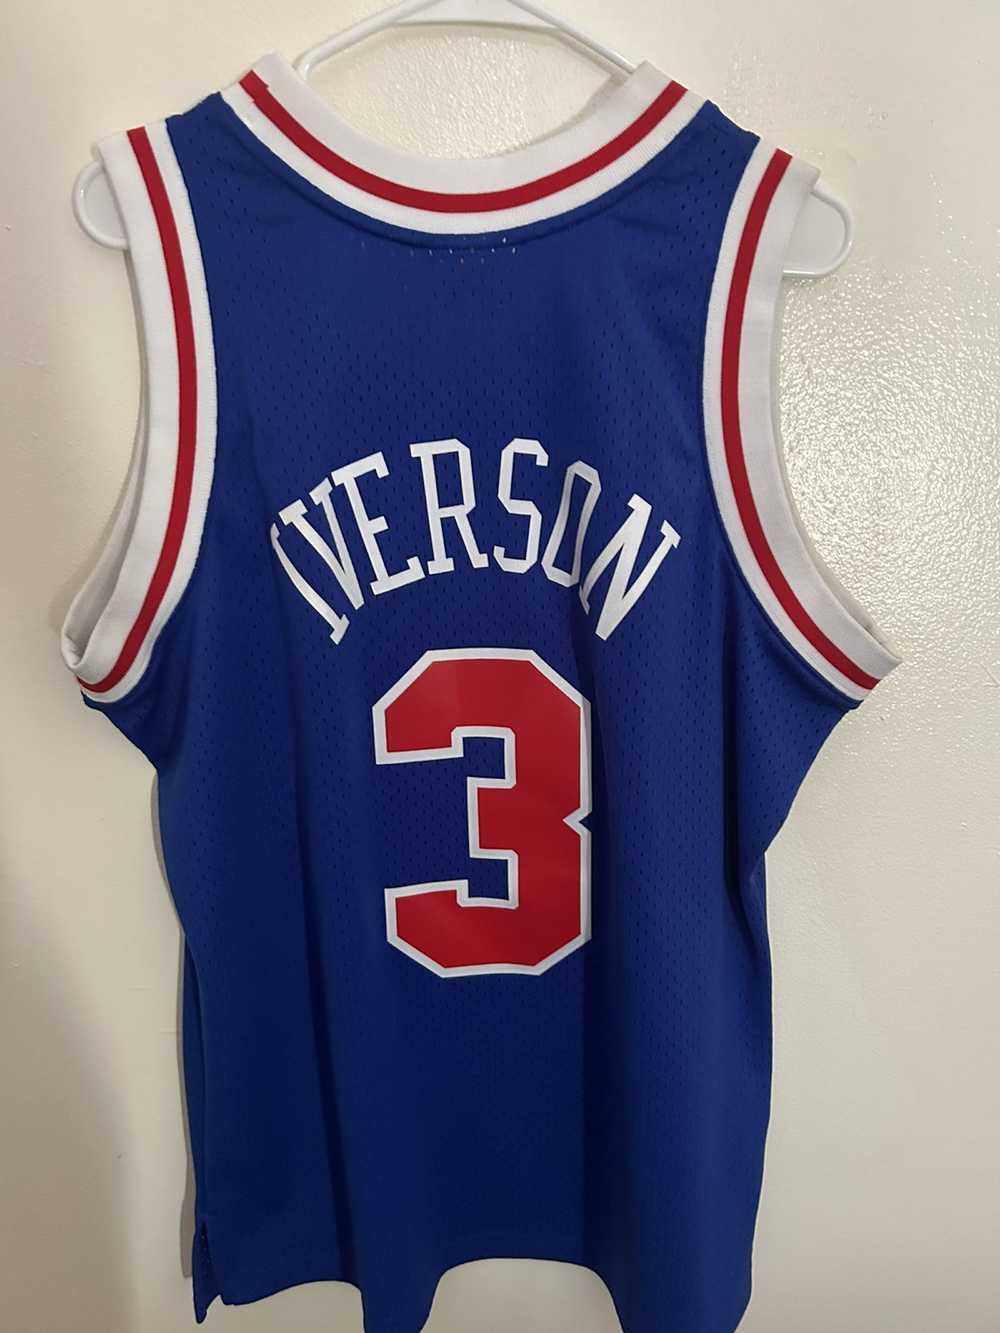 NBA Allen Iverson Jersey - image 1